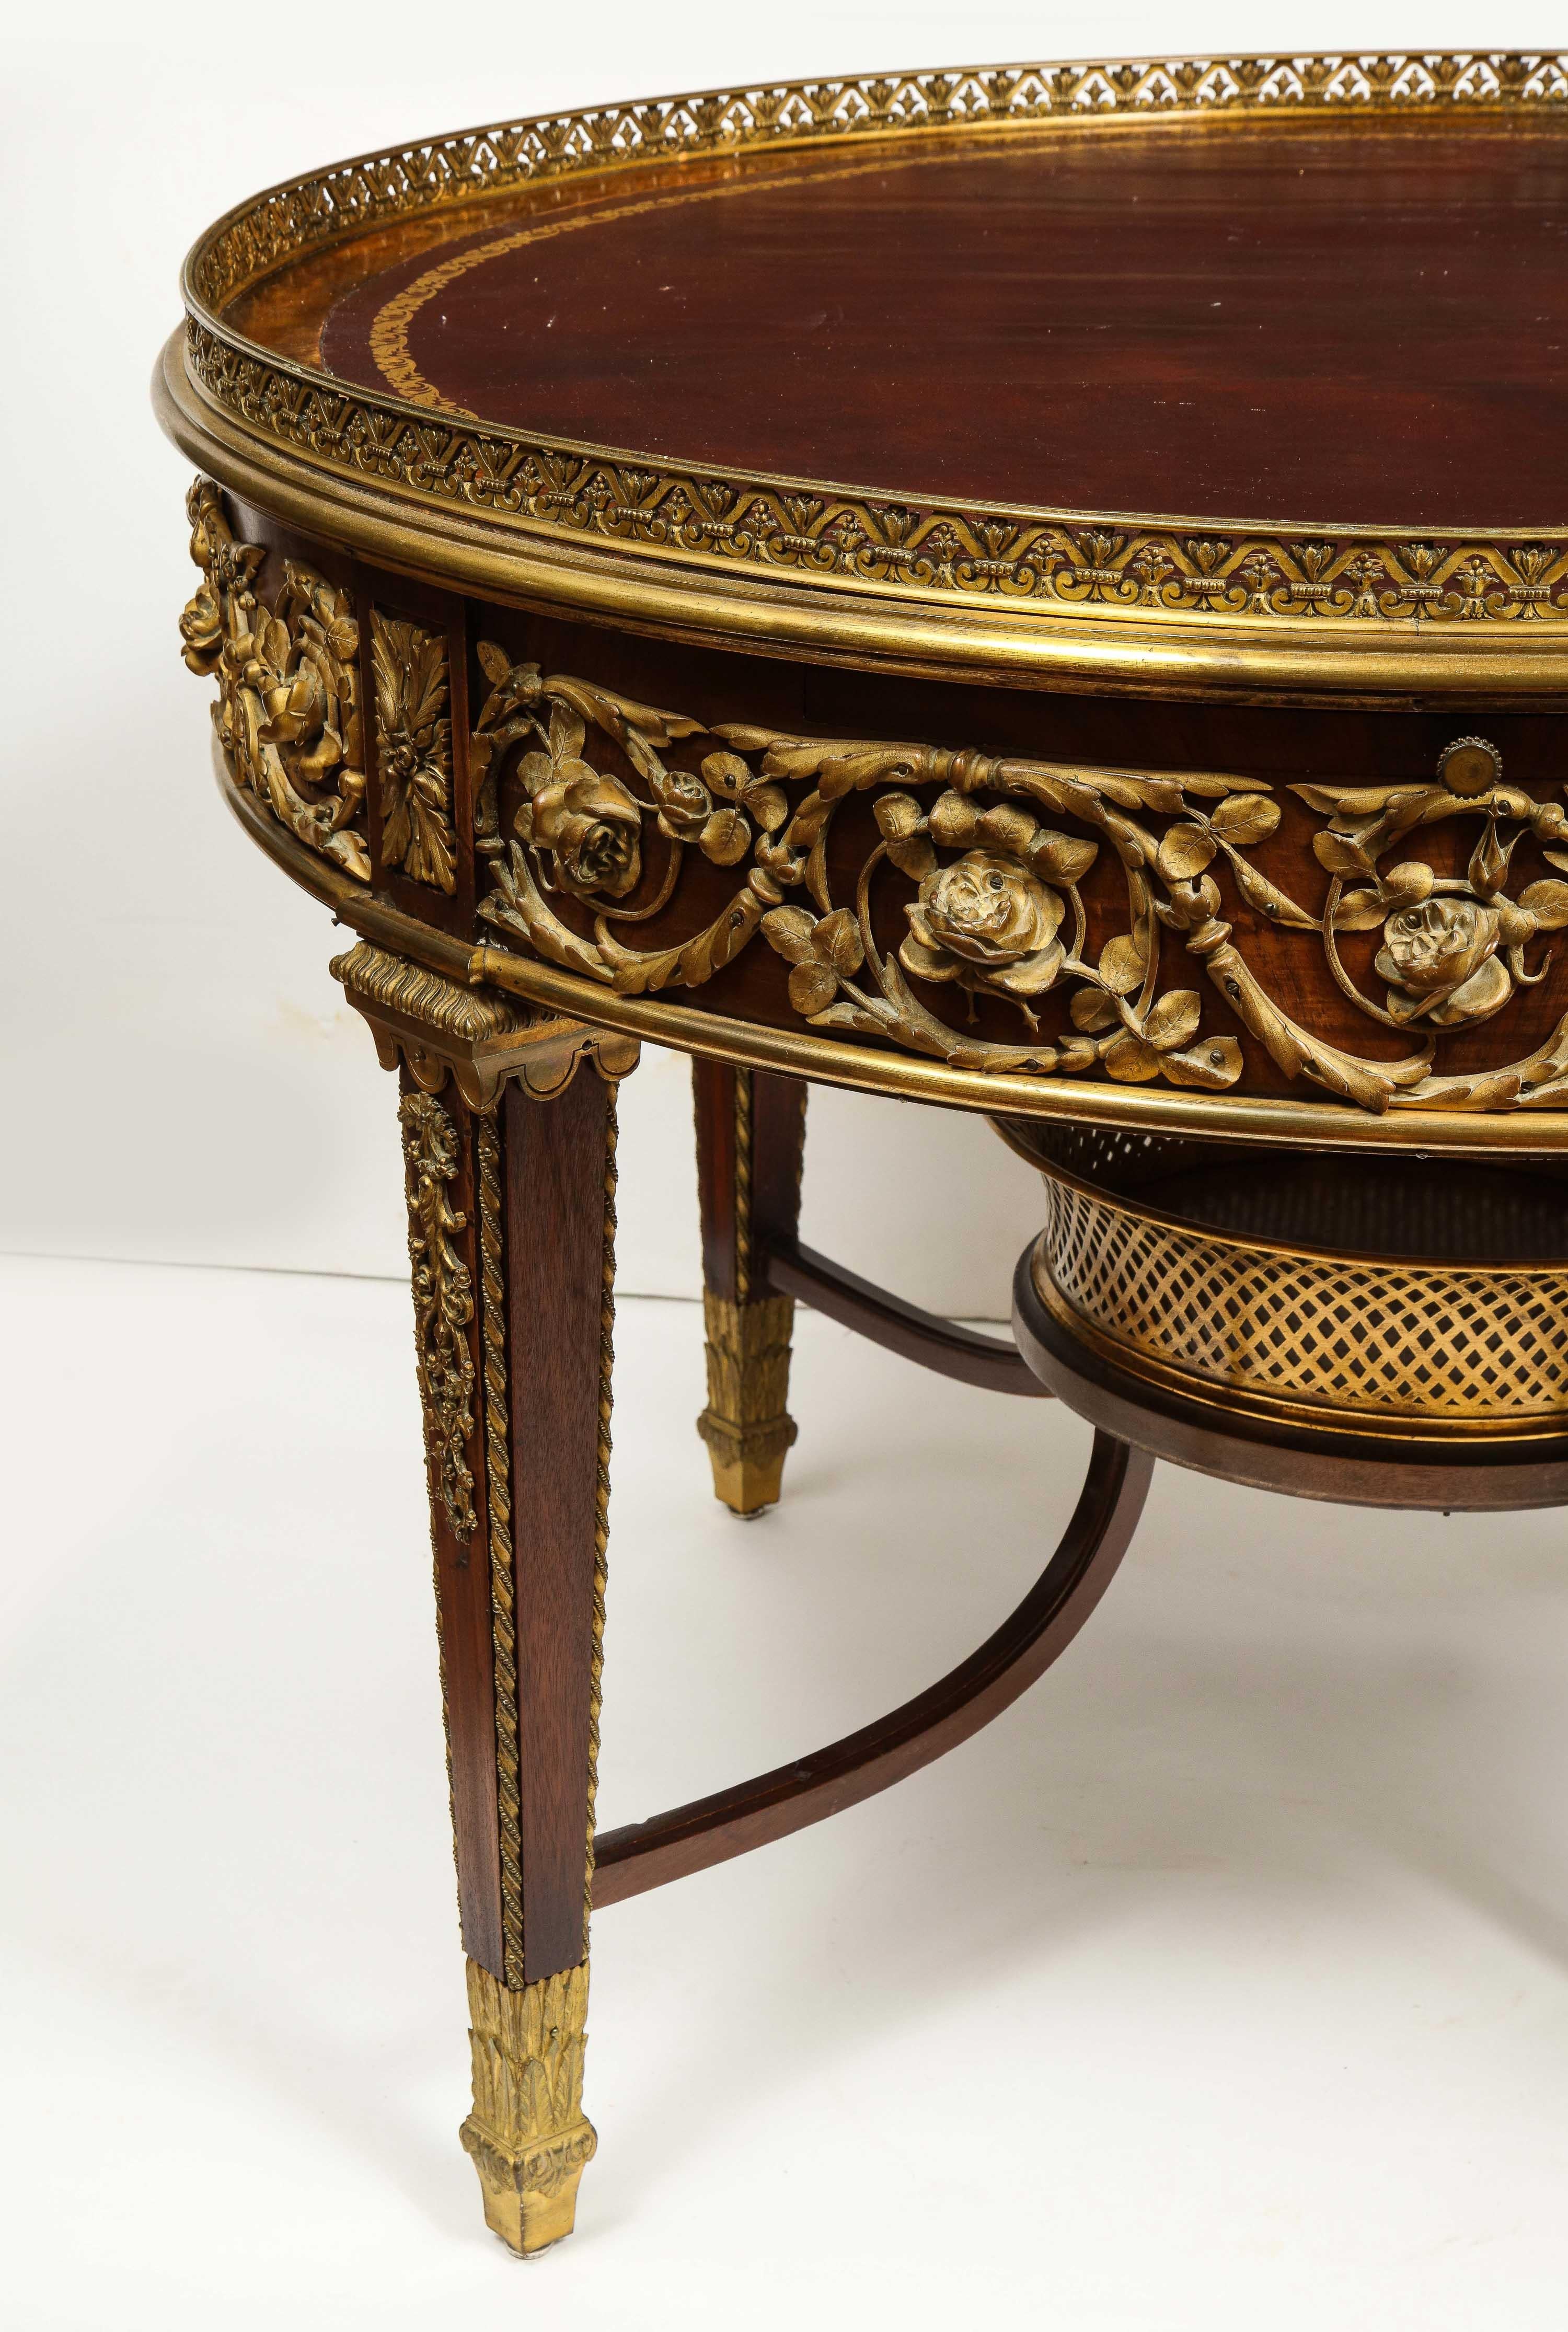 Bronze Exceptional Quality French Ormolu-Mounted Mahogany Center Table, Attrib F. Linke